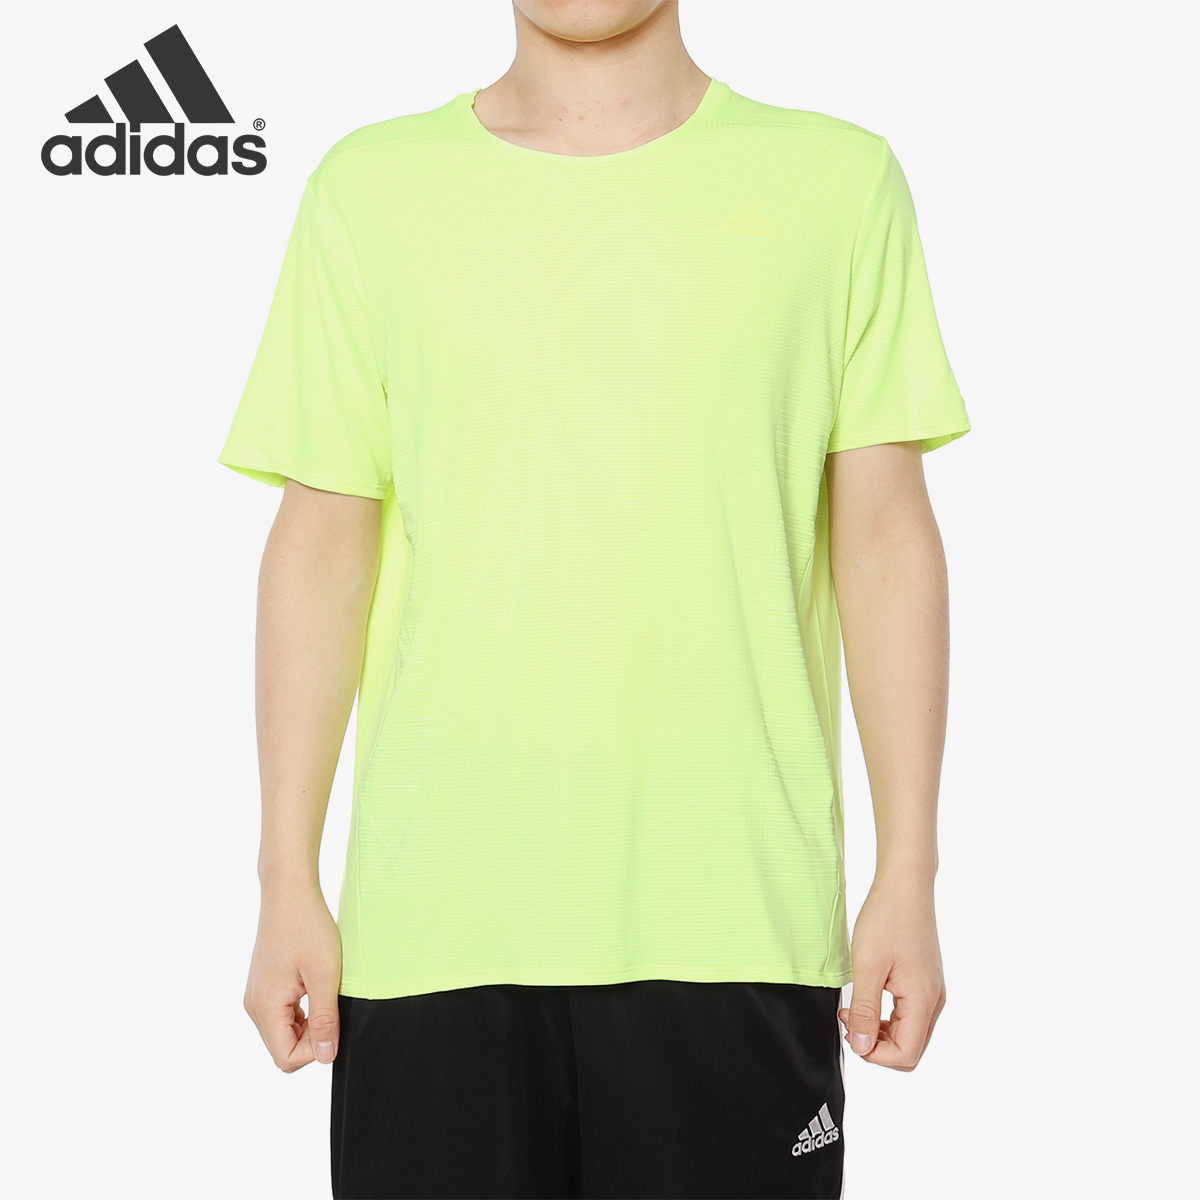 Adidas/阿迪达斯正品Climachill 男子运动跑步短袖T恤 DQ1850 运动服/休闲服装 运动T恤 原图主图